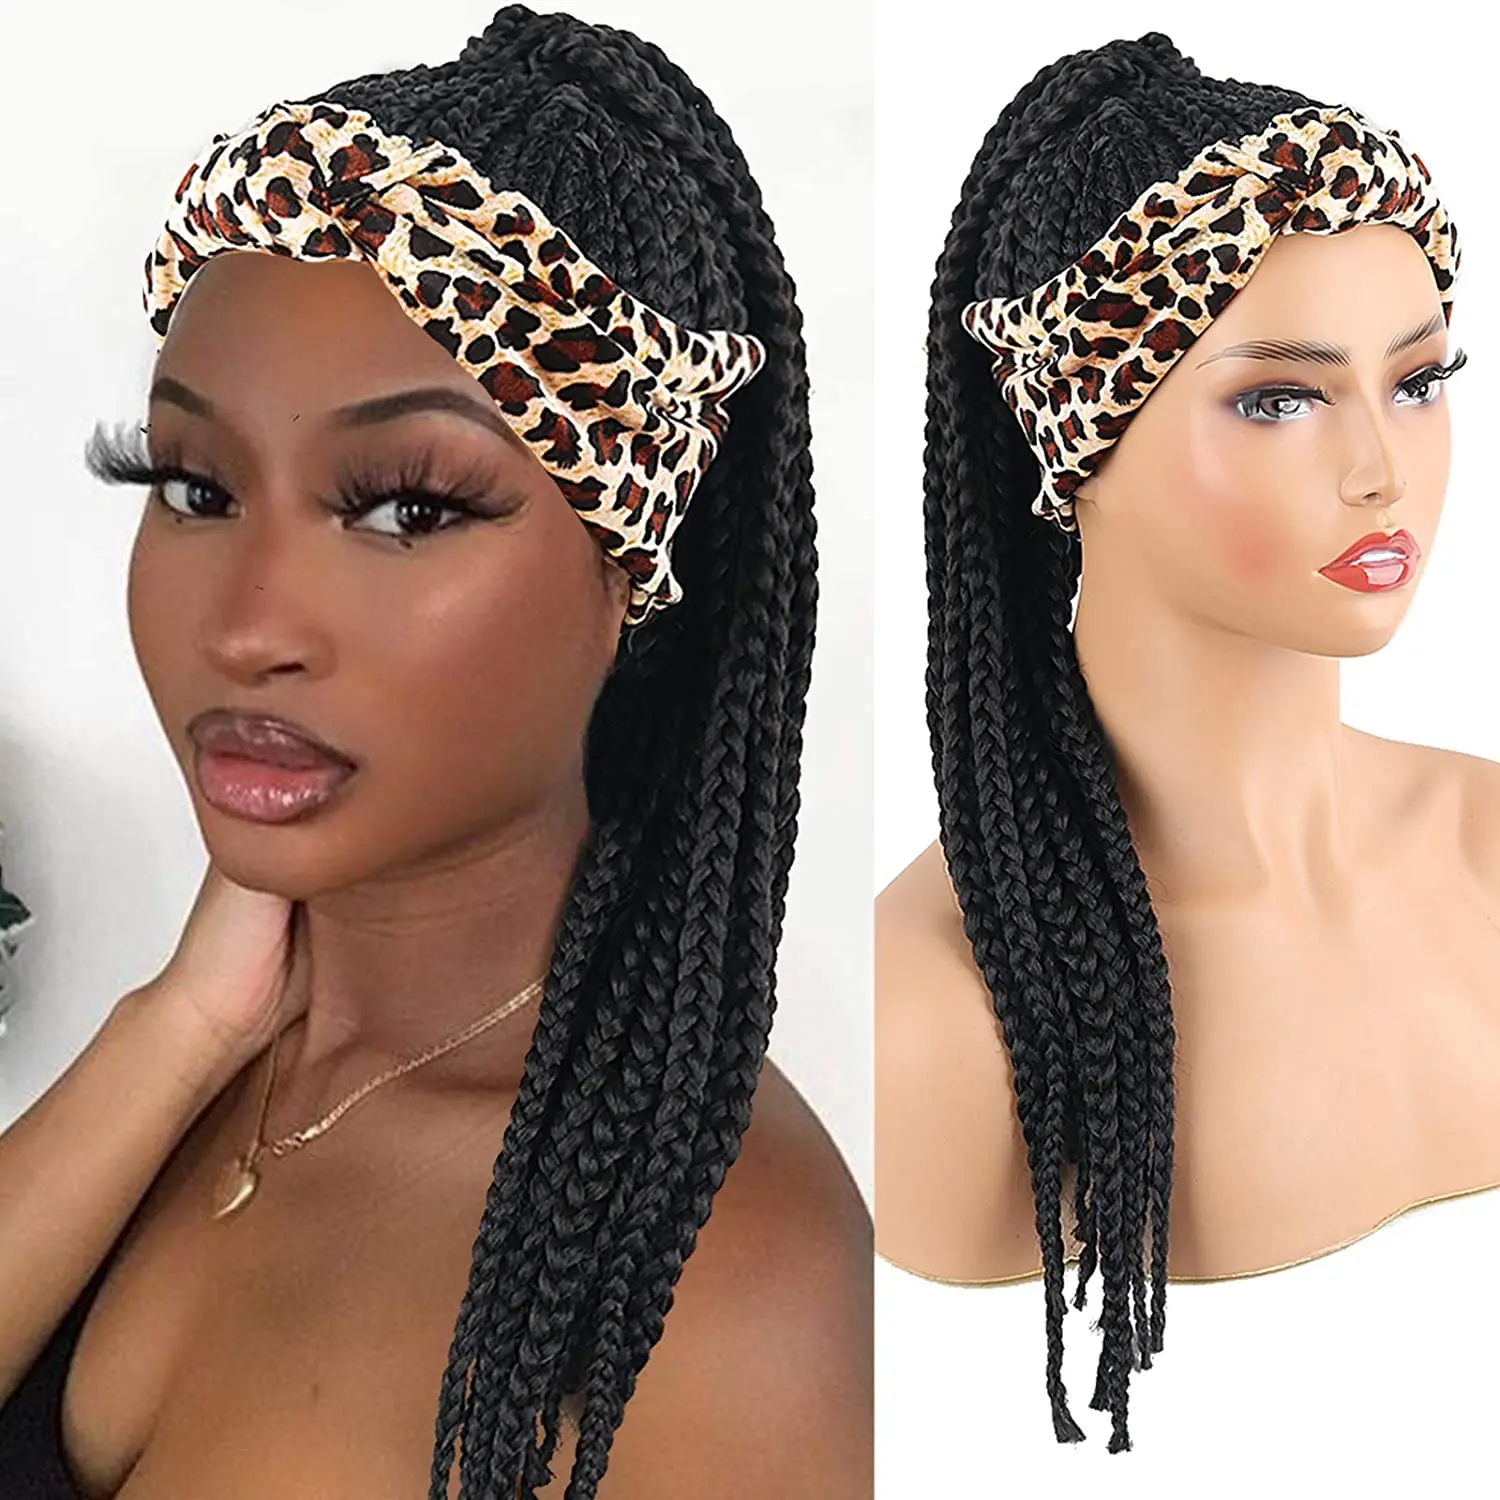 

Hot Selling Box Braided Headband Wigs for Black Women Twist Crochet Dreadlocks Braids Synthetic Hair Replacement Wig